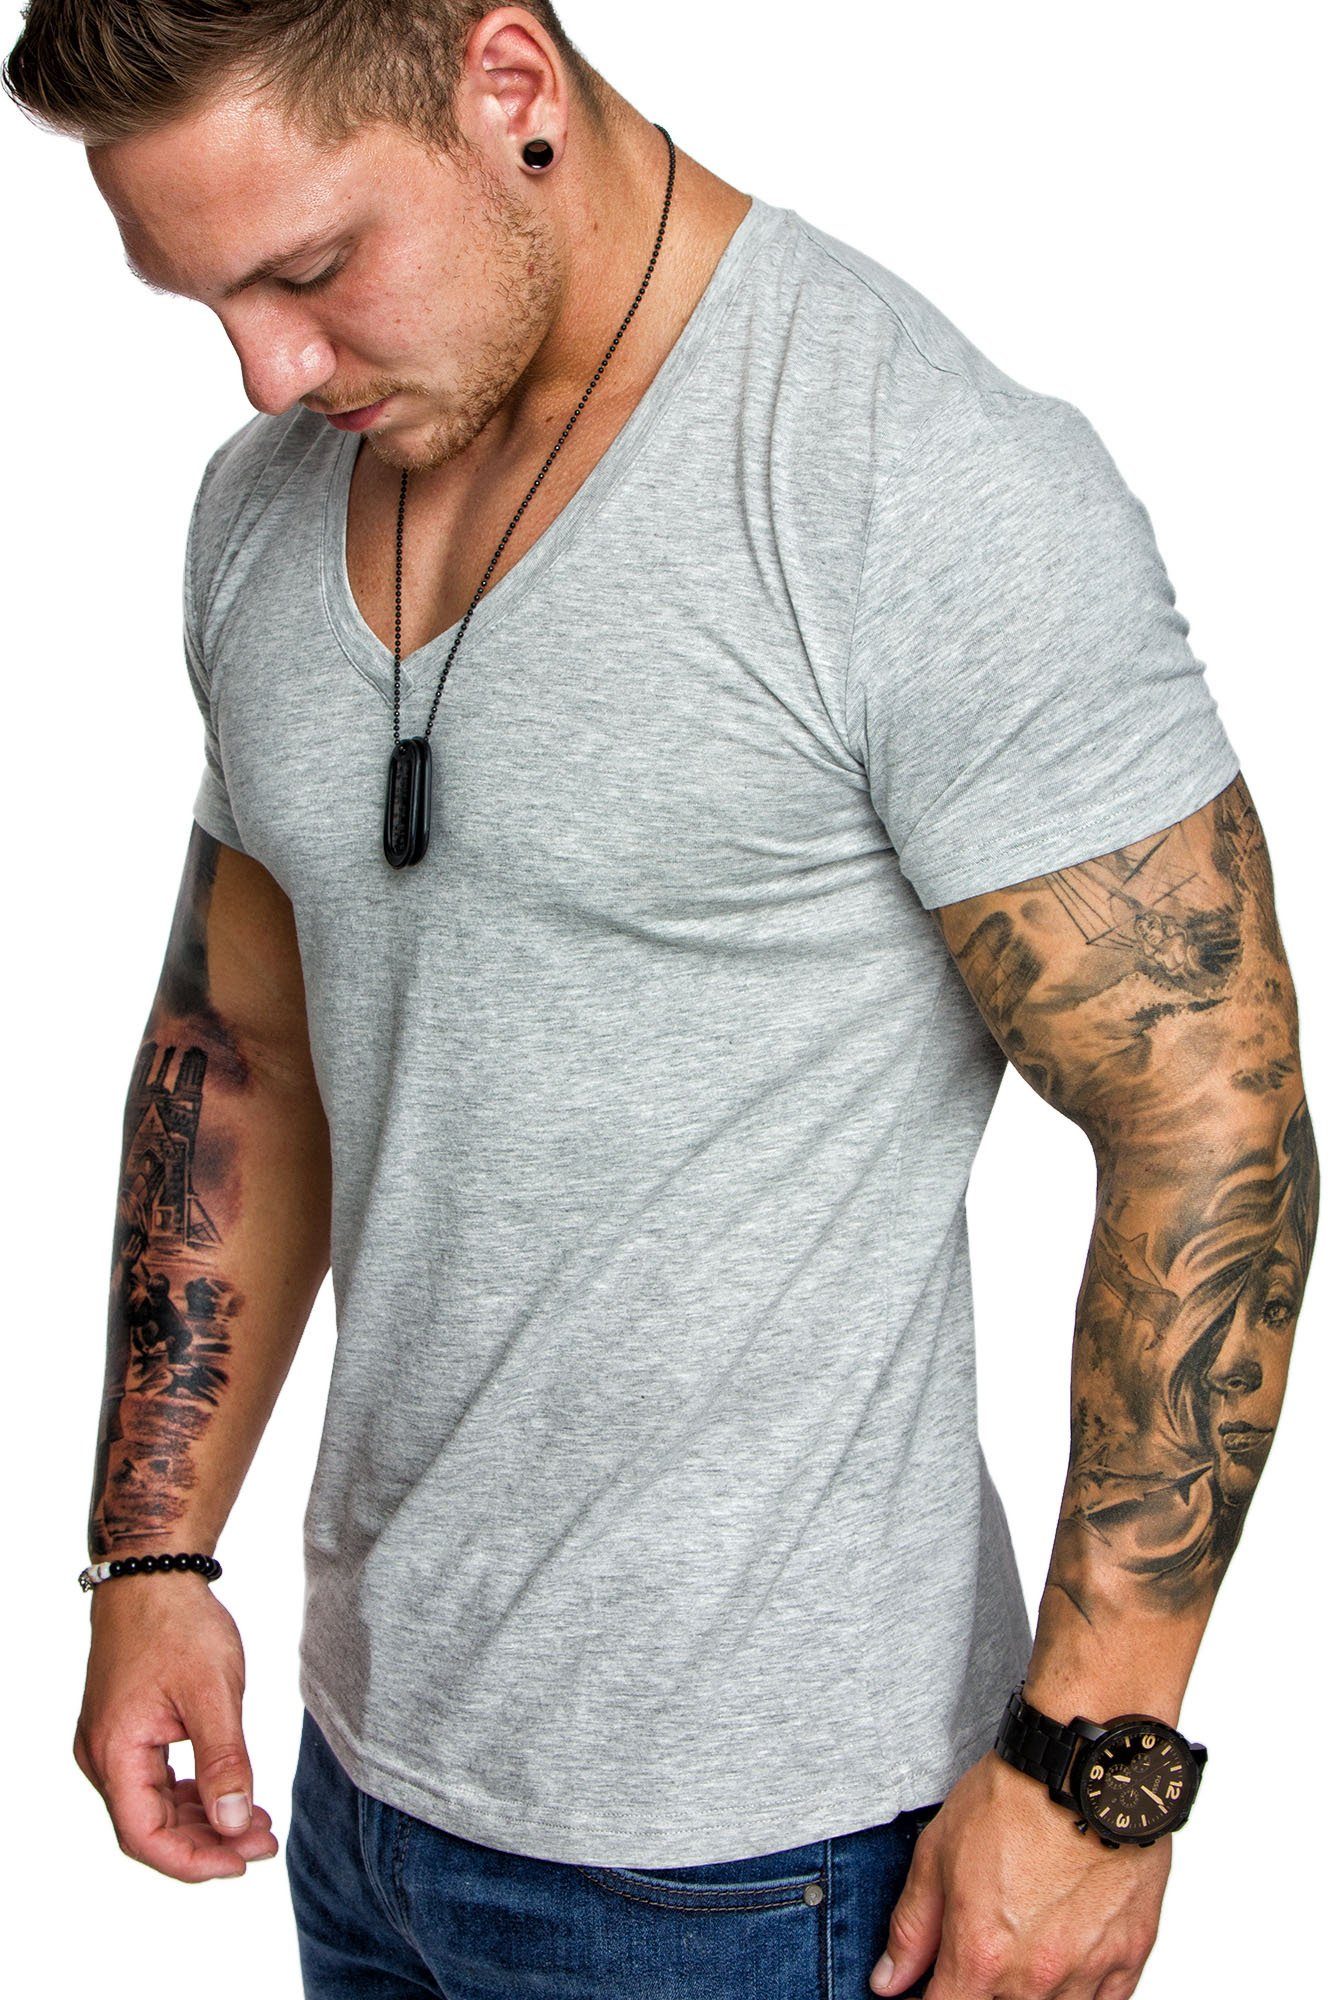 Amaci&Sons T-Shirt EUGENE Basic T-Shirt mit V-Ausschnitt Herren Einfarbig Vintage V-Neck Basic V-Ausschnitt Shirt Grau Melange